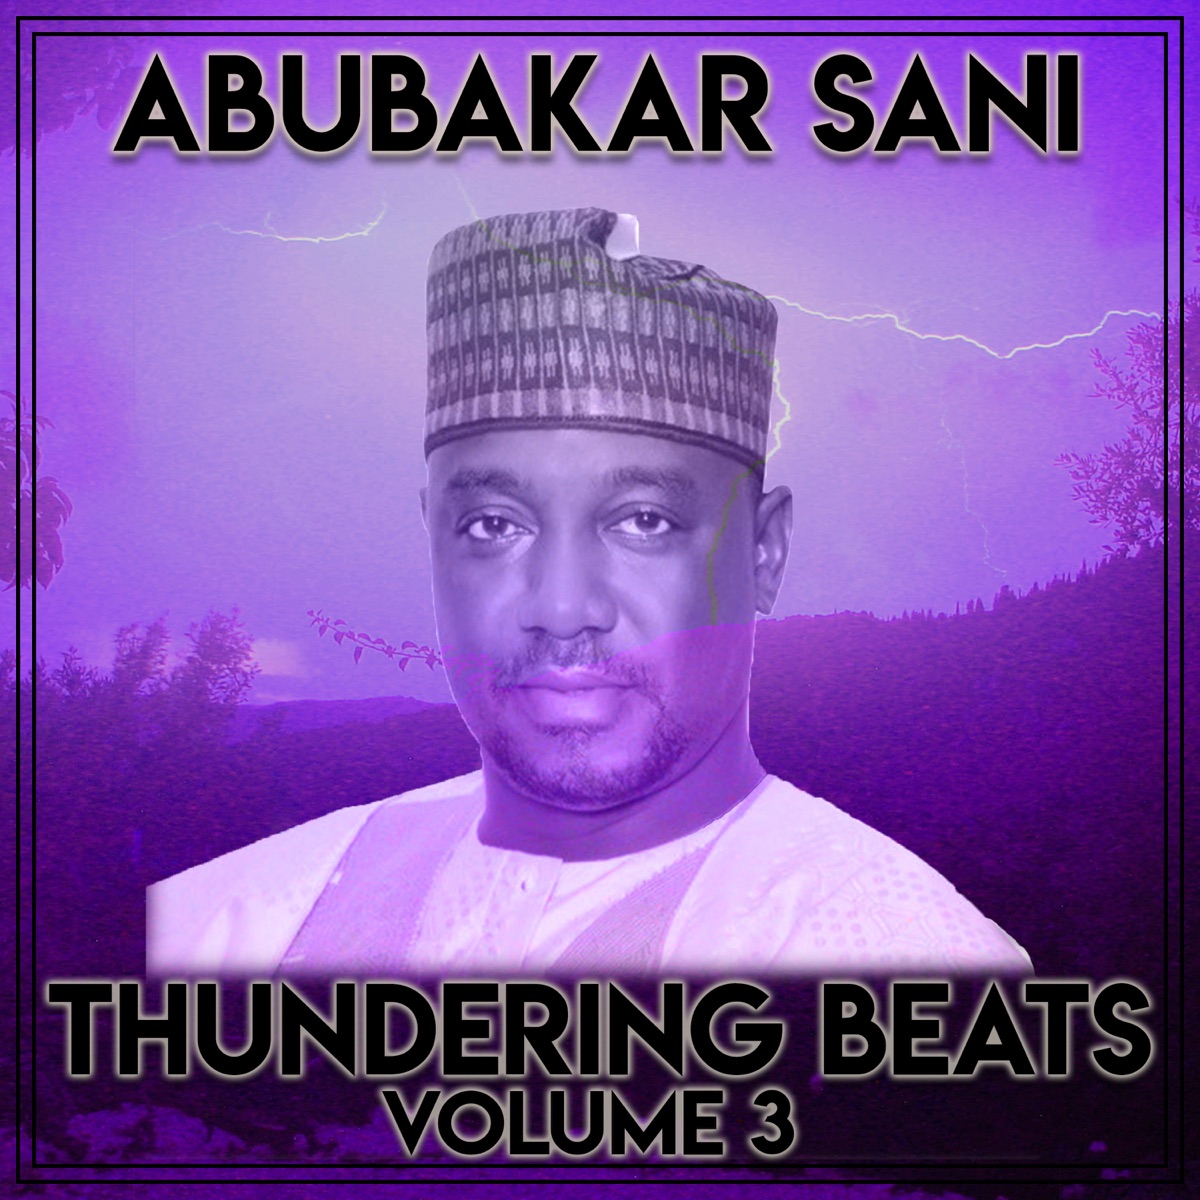 Thundering Beats, Vol. 2 by Abubakar Sani on Apple Music